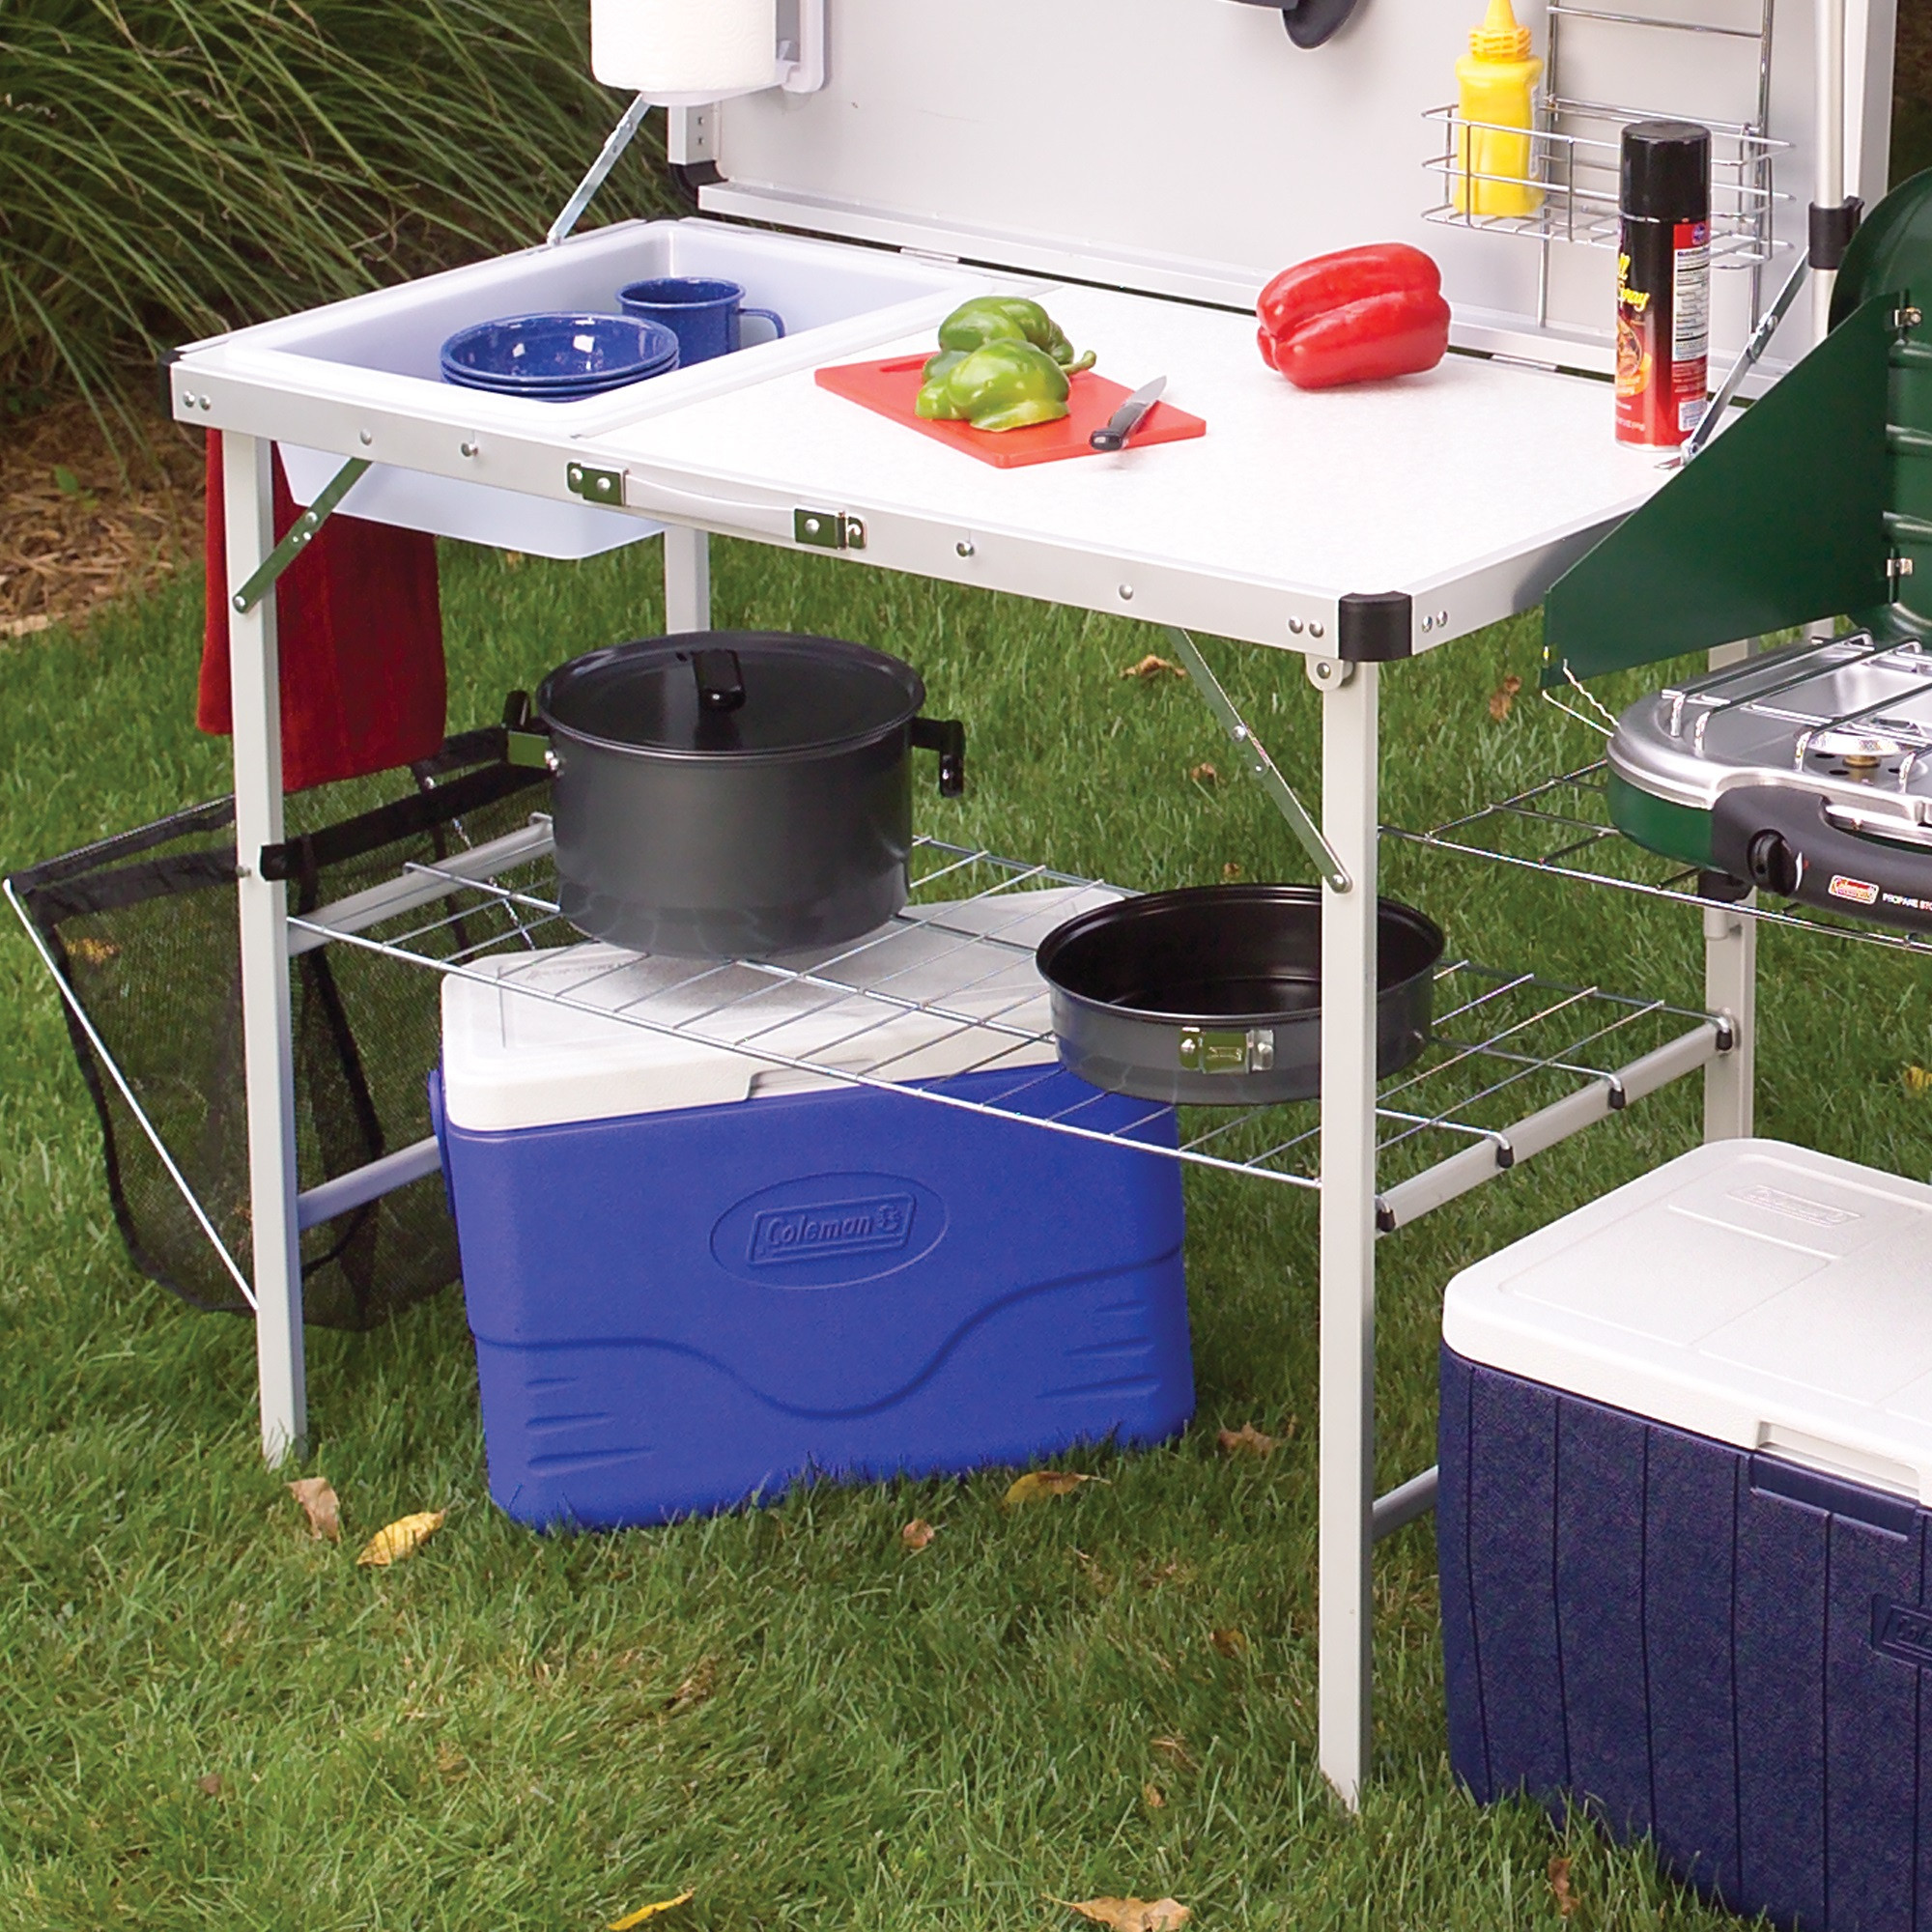 Outdoor Camp Kitchen
 Coleman Packaway Camp Kitchen Folding Travel Portable Set